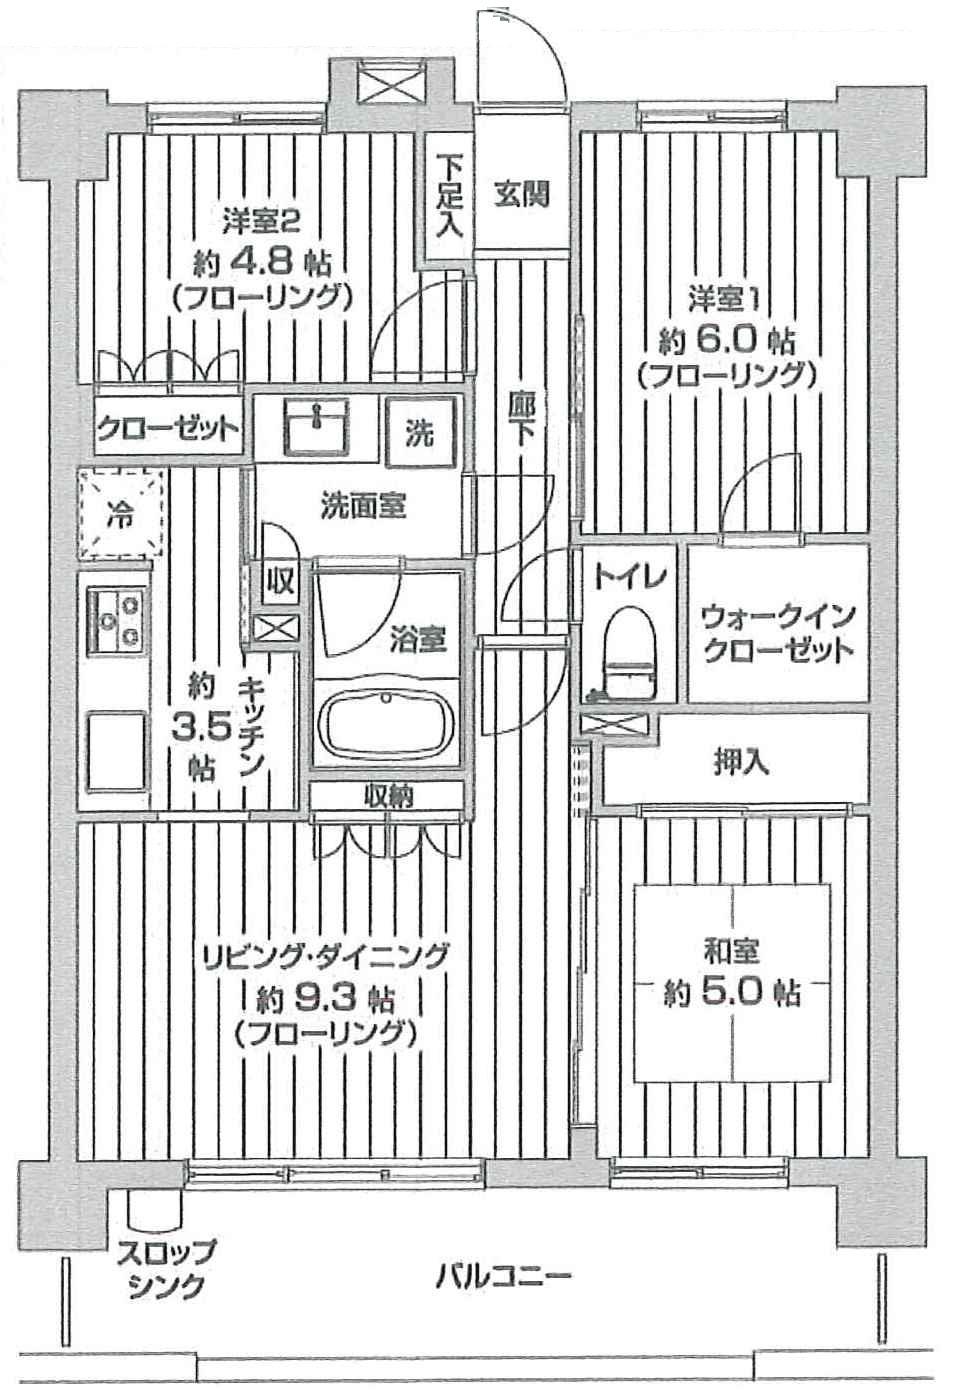 Floor plan. 3LDK, Price 26,900,000 yen, Occupied area 65.06 sq m , Balcony area 12 sq m